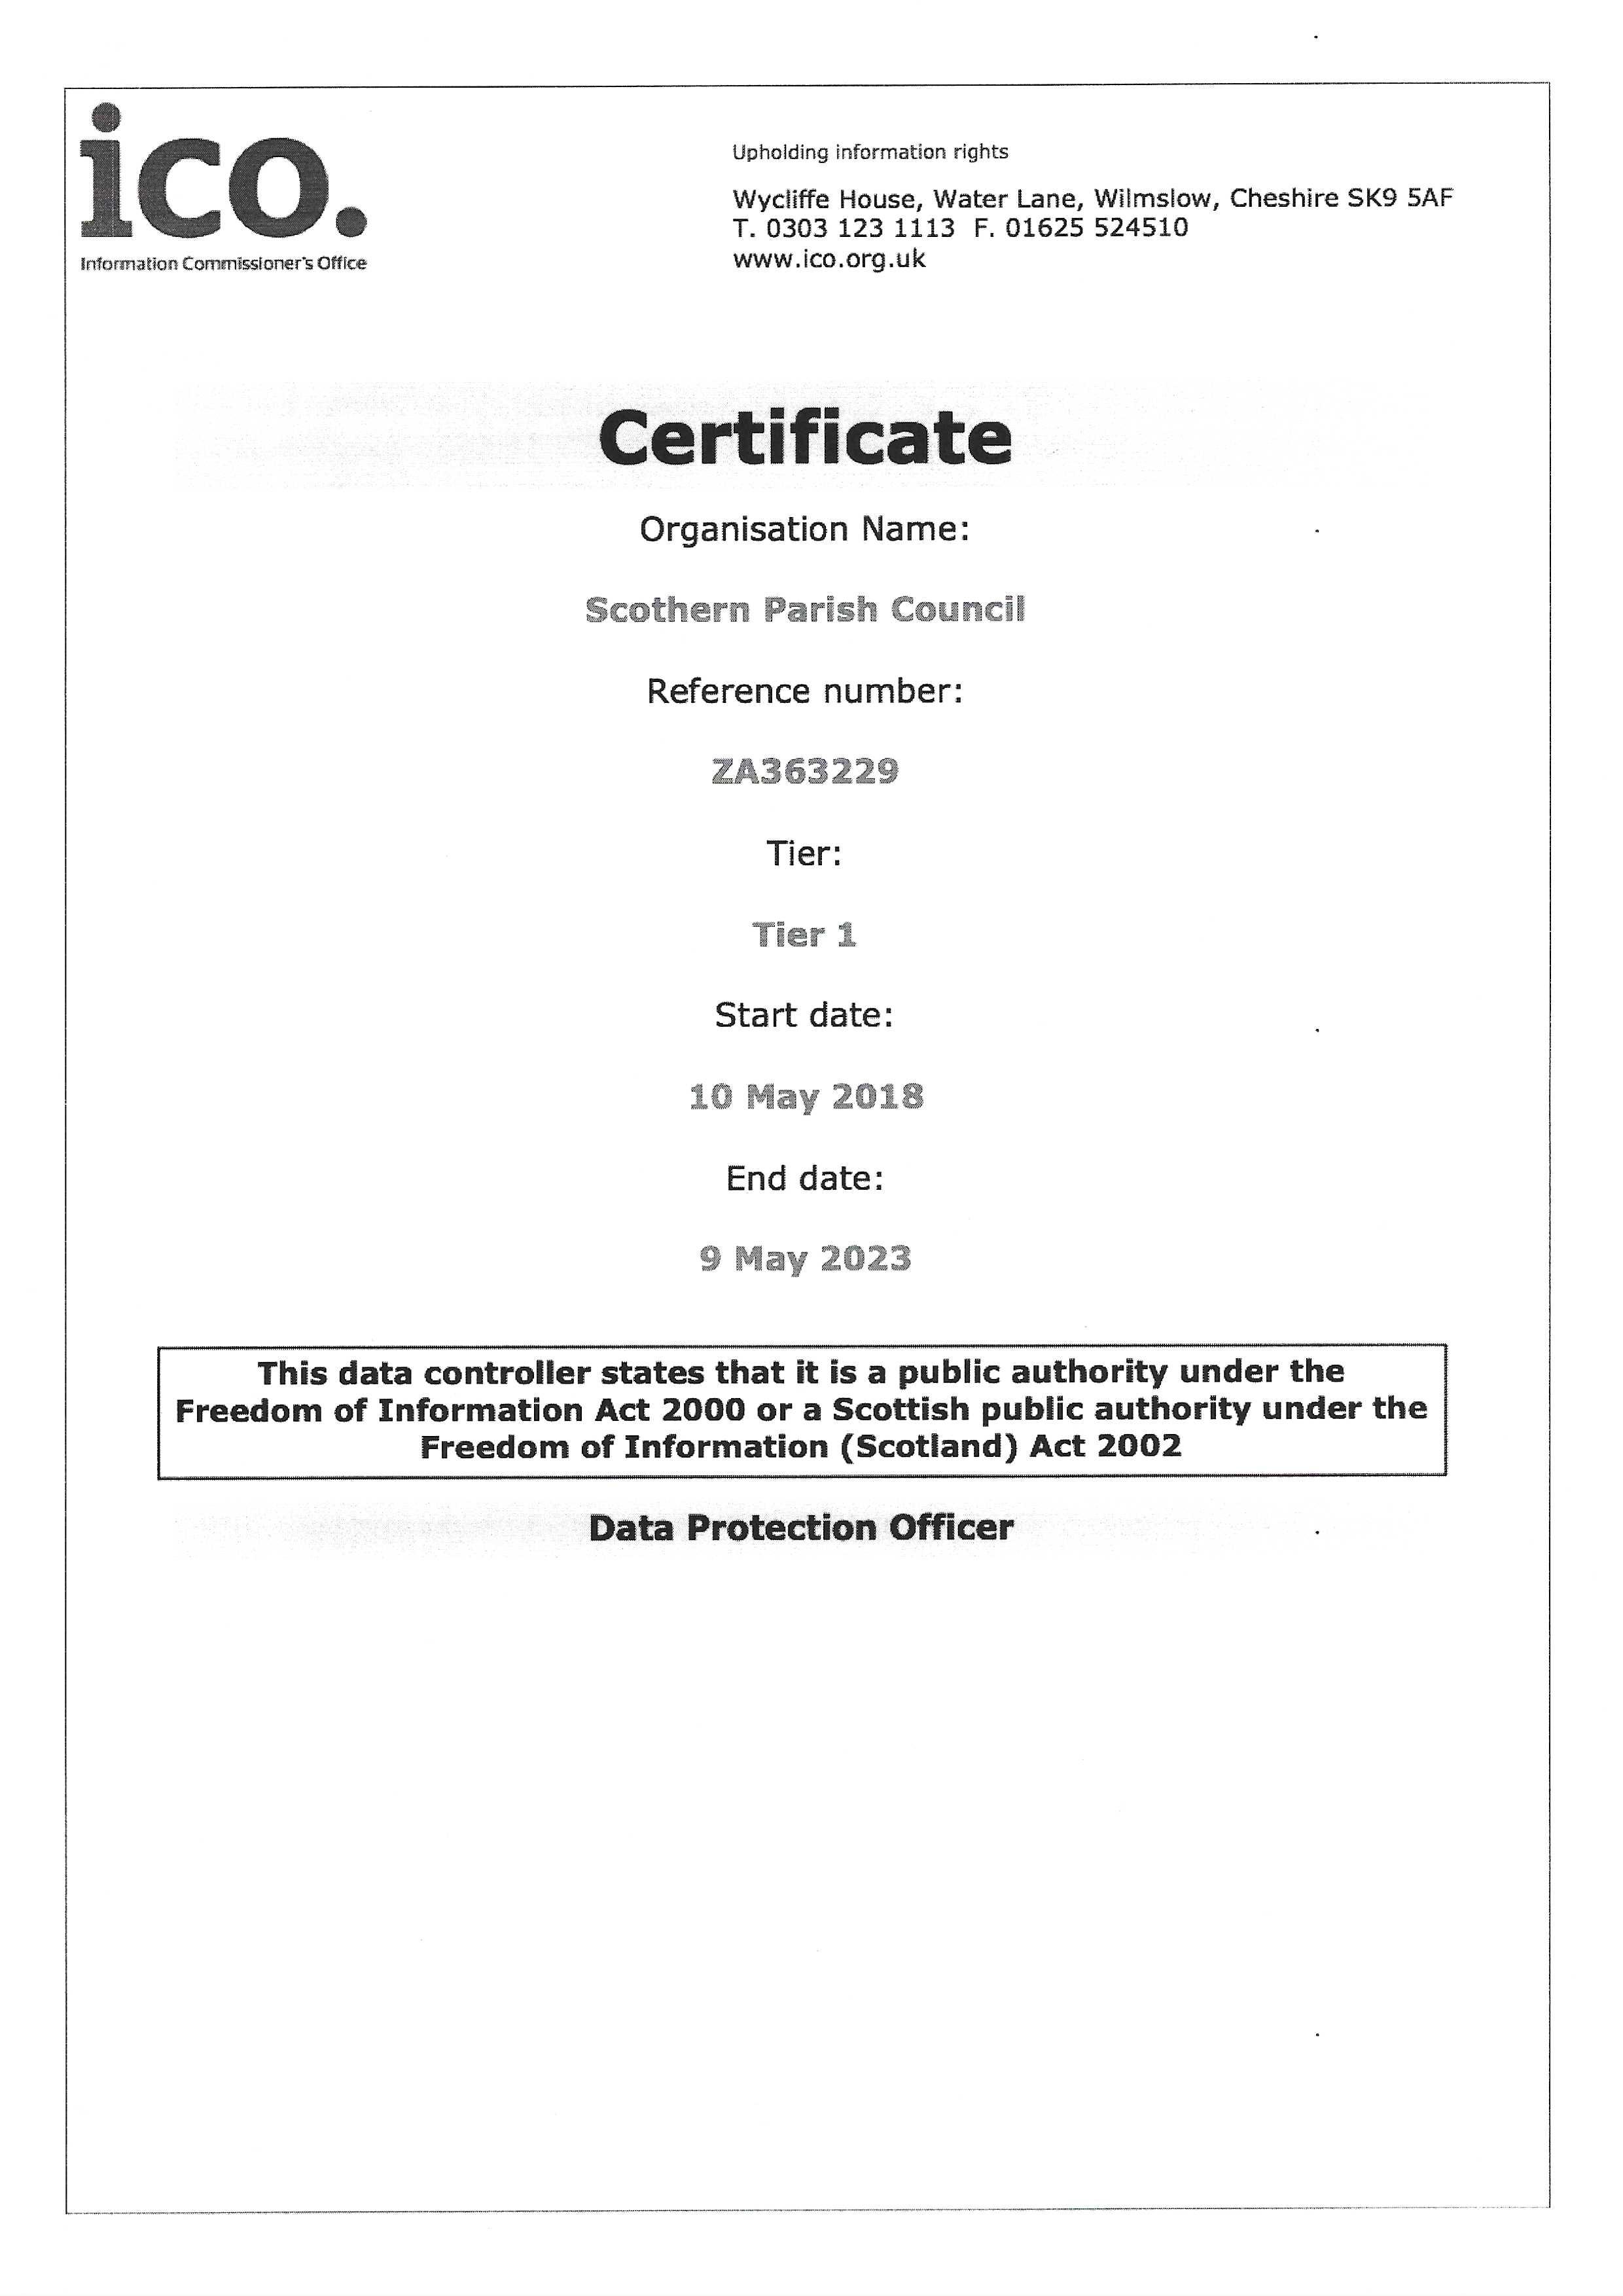 ICO Certificate 2018-2023